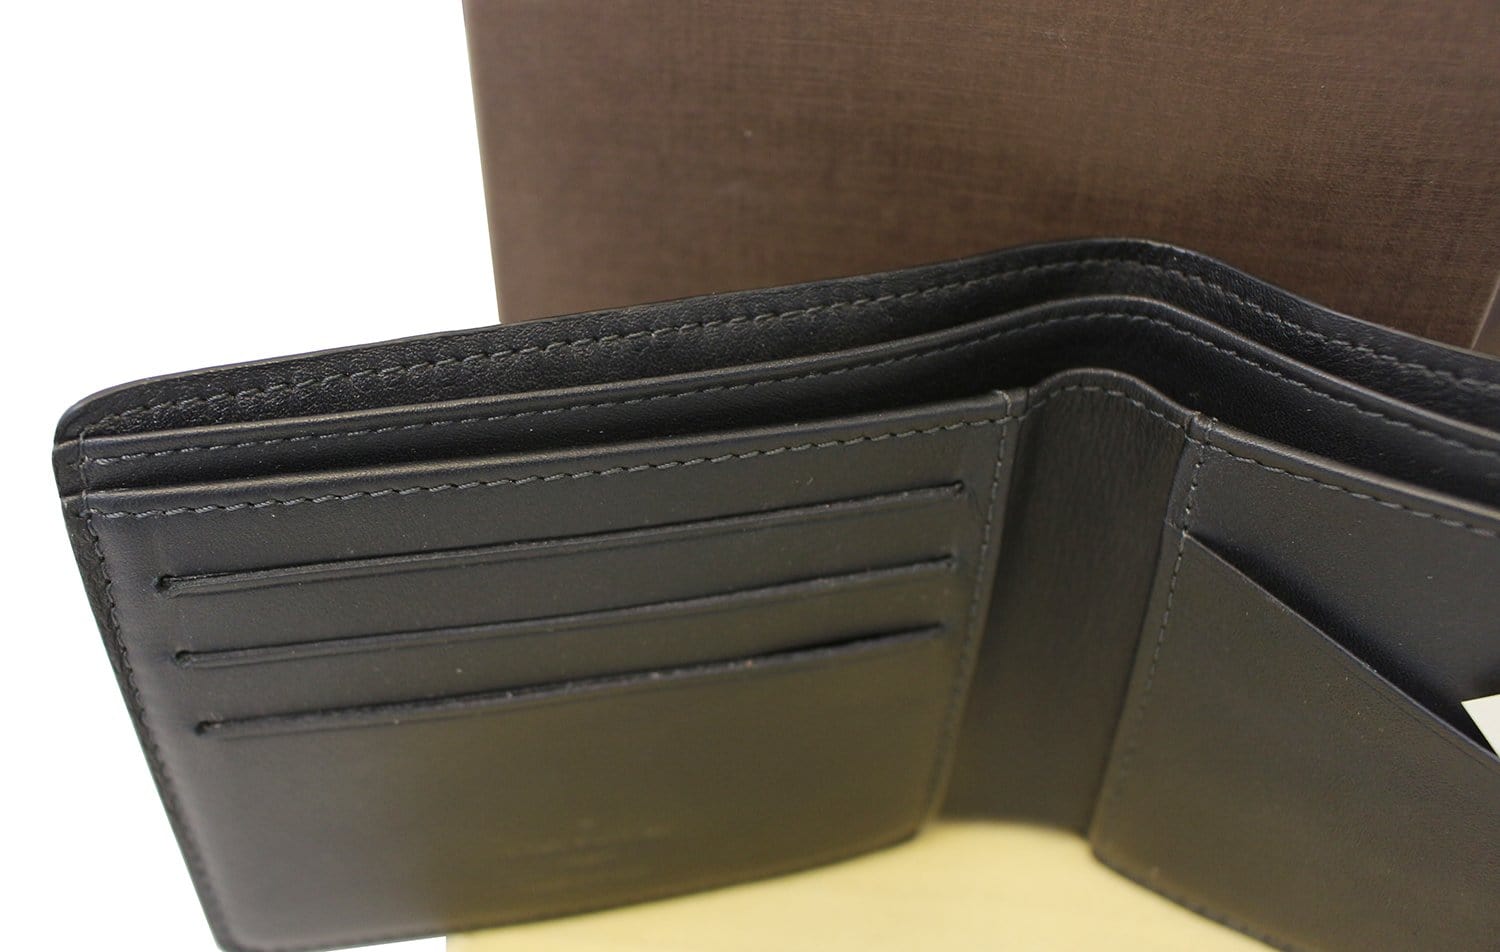 Louis Vuitton Multiple Wallet Brown in Monogram Cowhide Leather - US